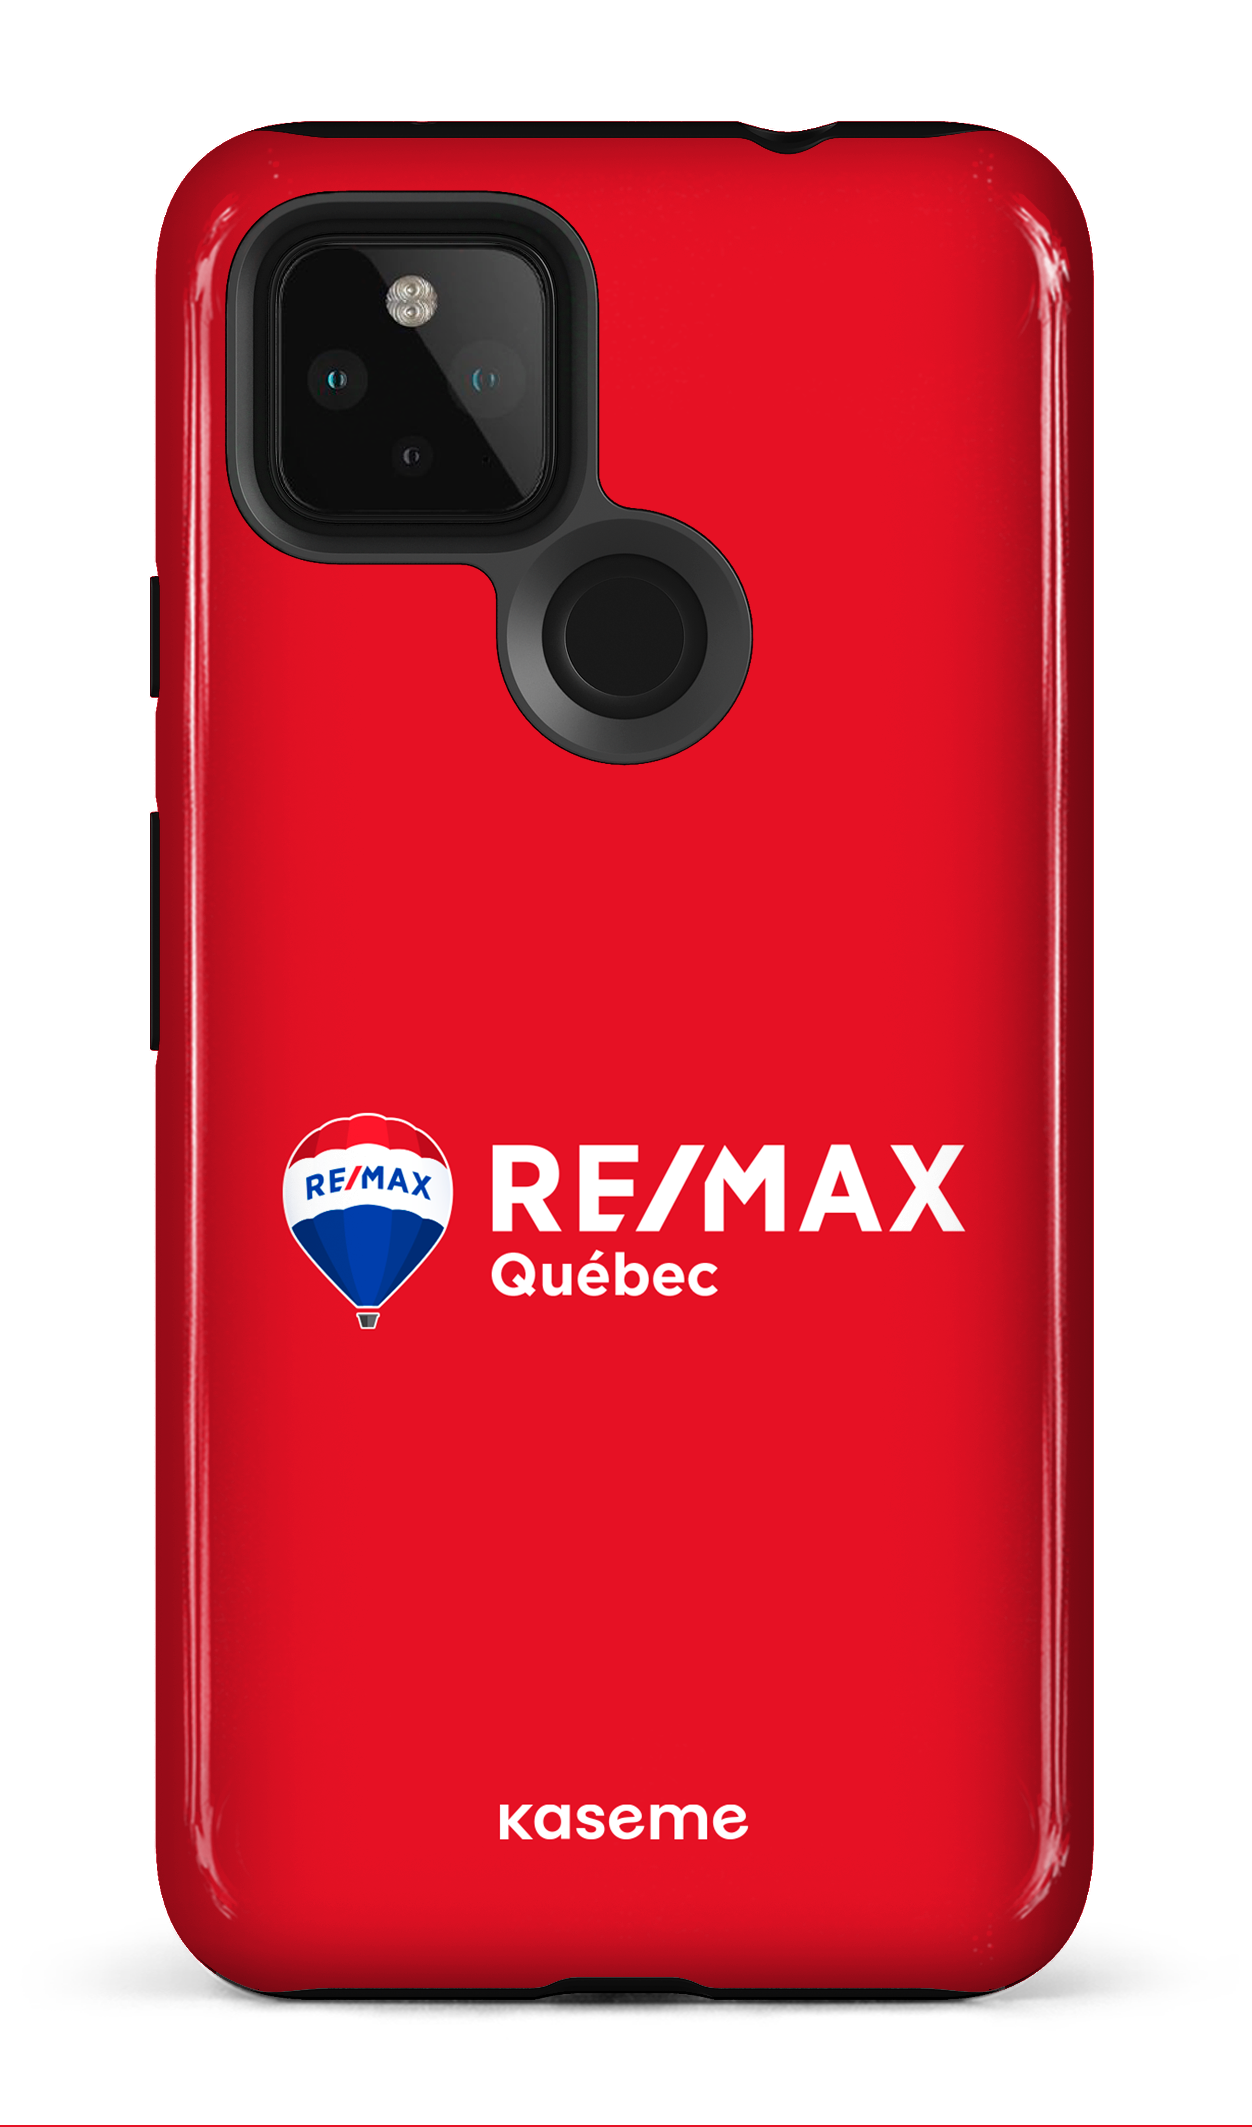 Remax Québec Rouge - Google Pixel 4A (5G)